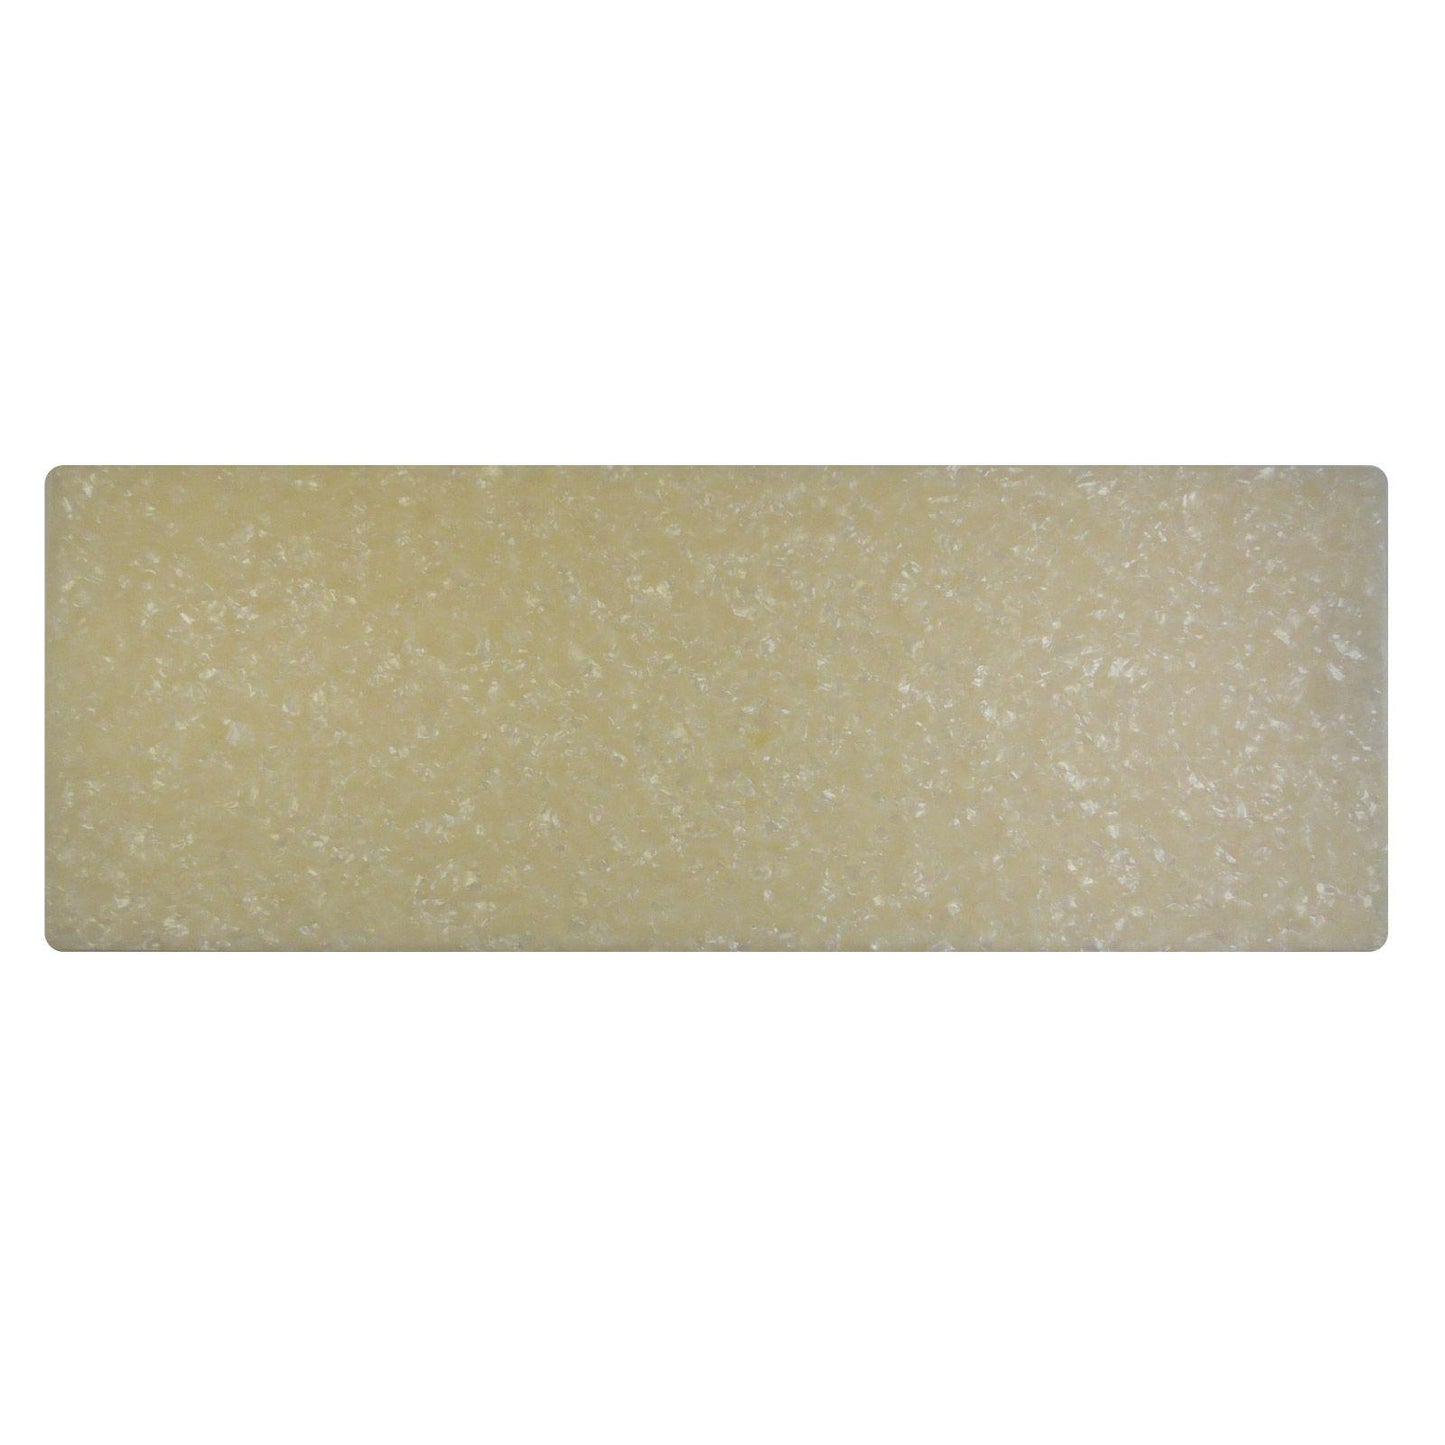 Incudo White Pearloid Cellulose Acetate Sheet - 700x168x2mm